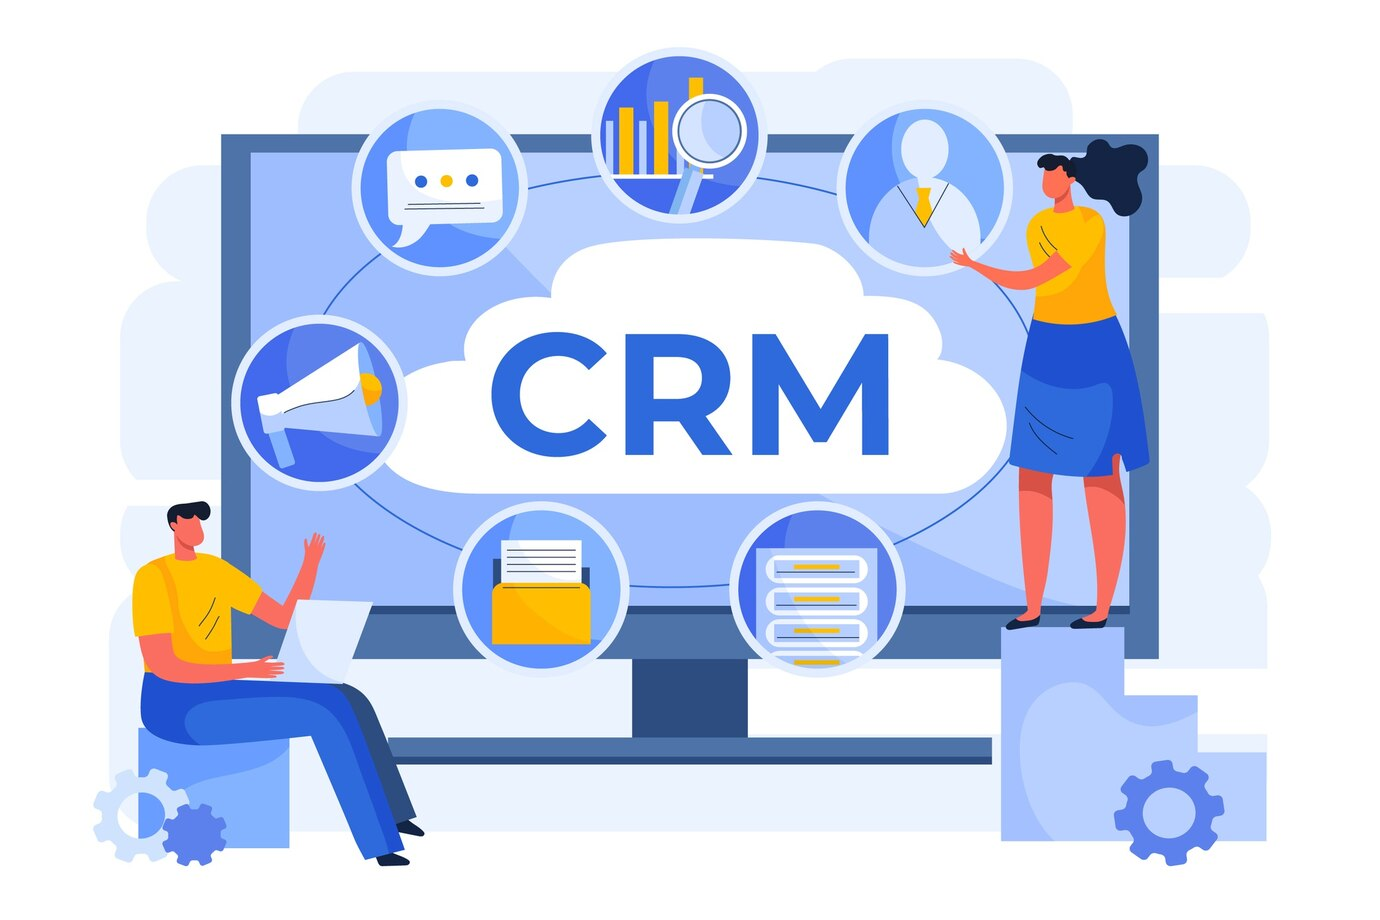 CRM - Customer Relationship Management stack of aakshauhini